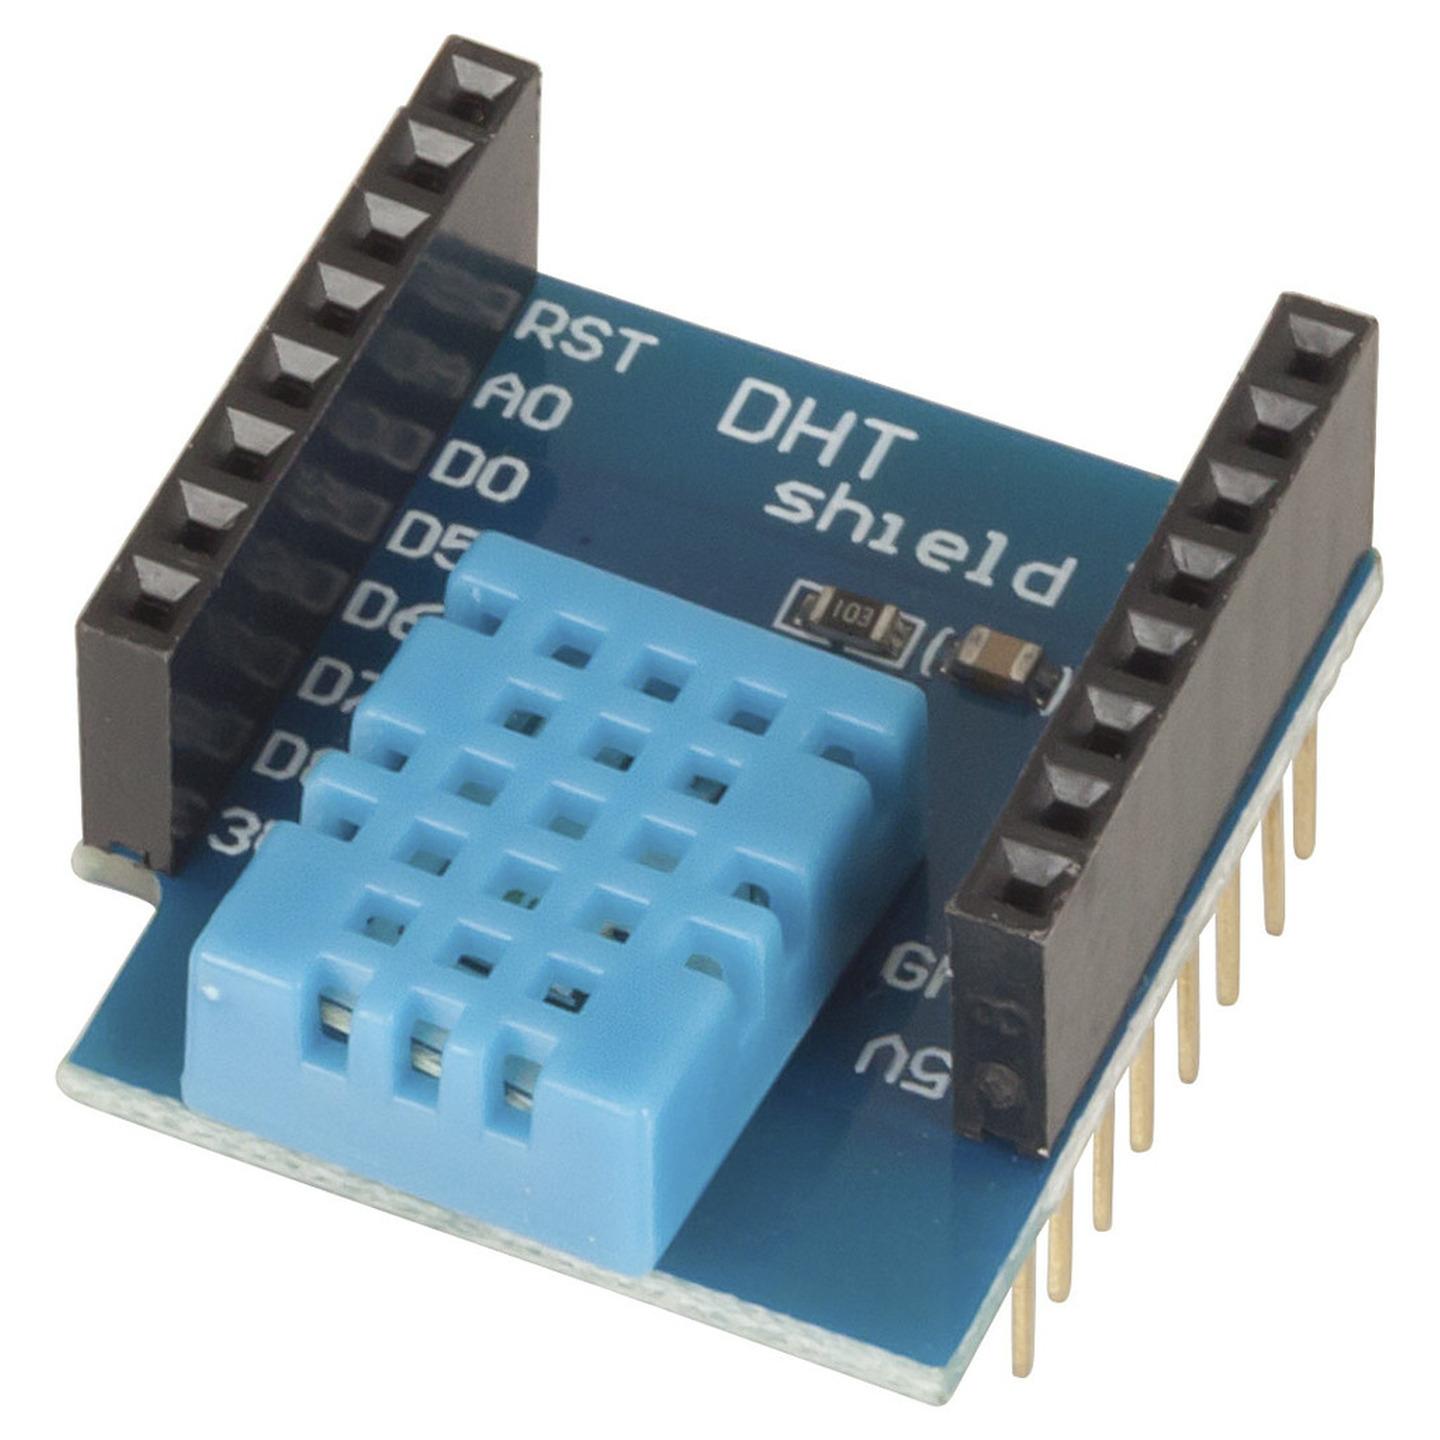 Duinotech Wi-Fi Mini DHT11 Temperature and Humidity Sensor Shield